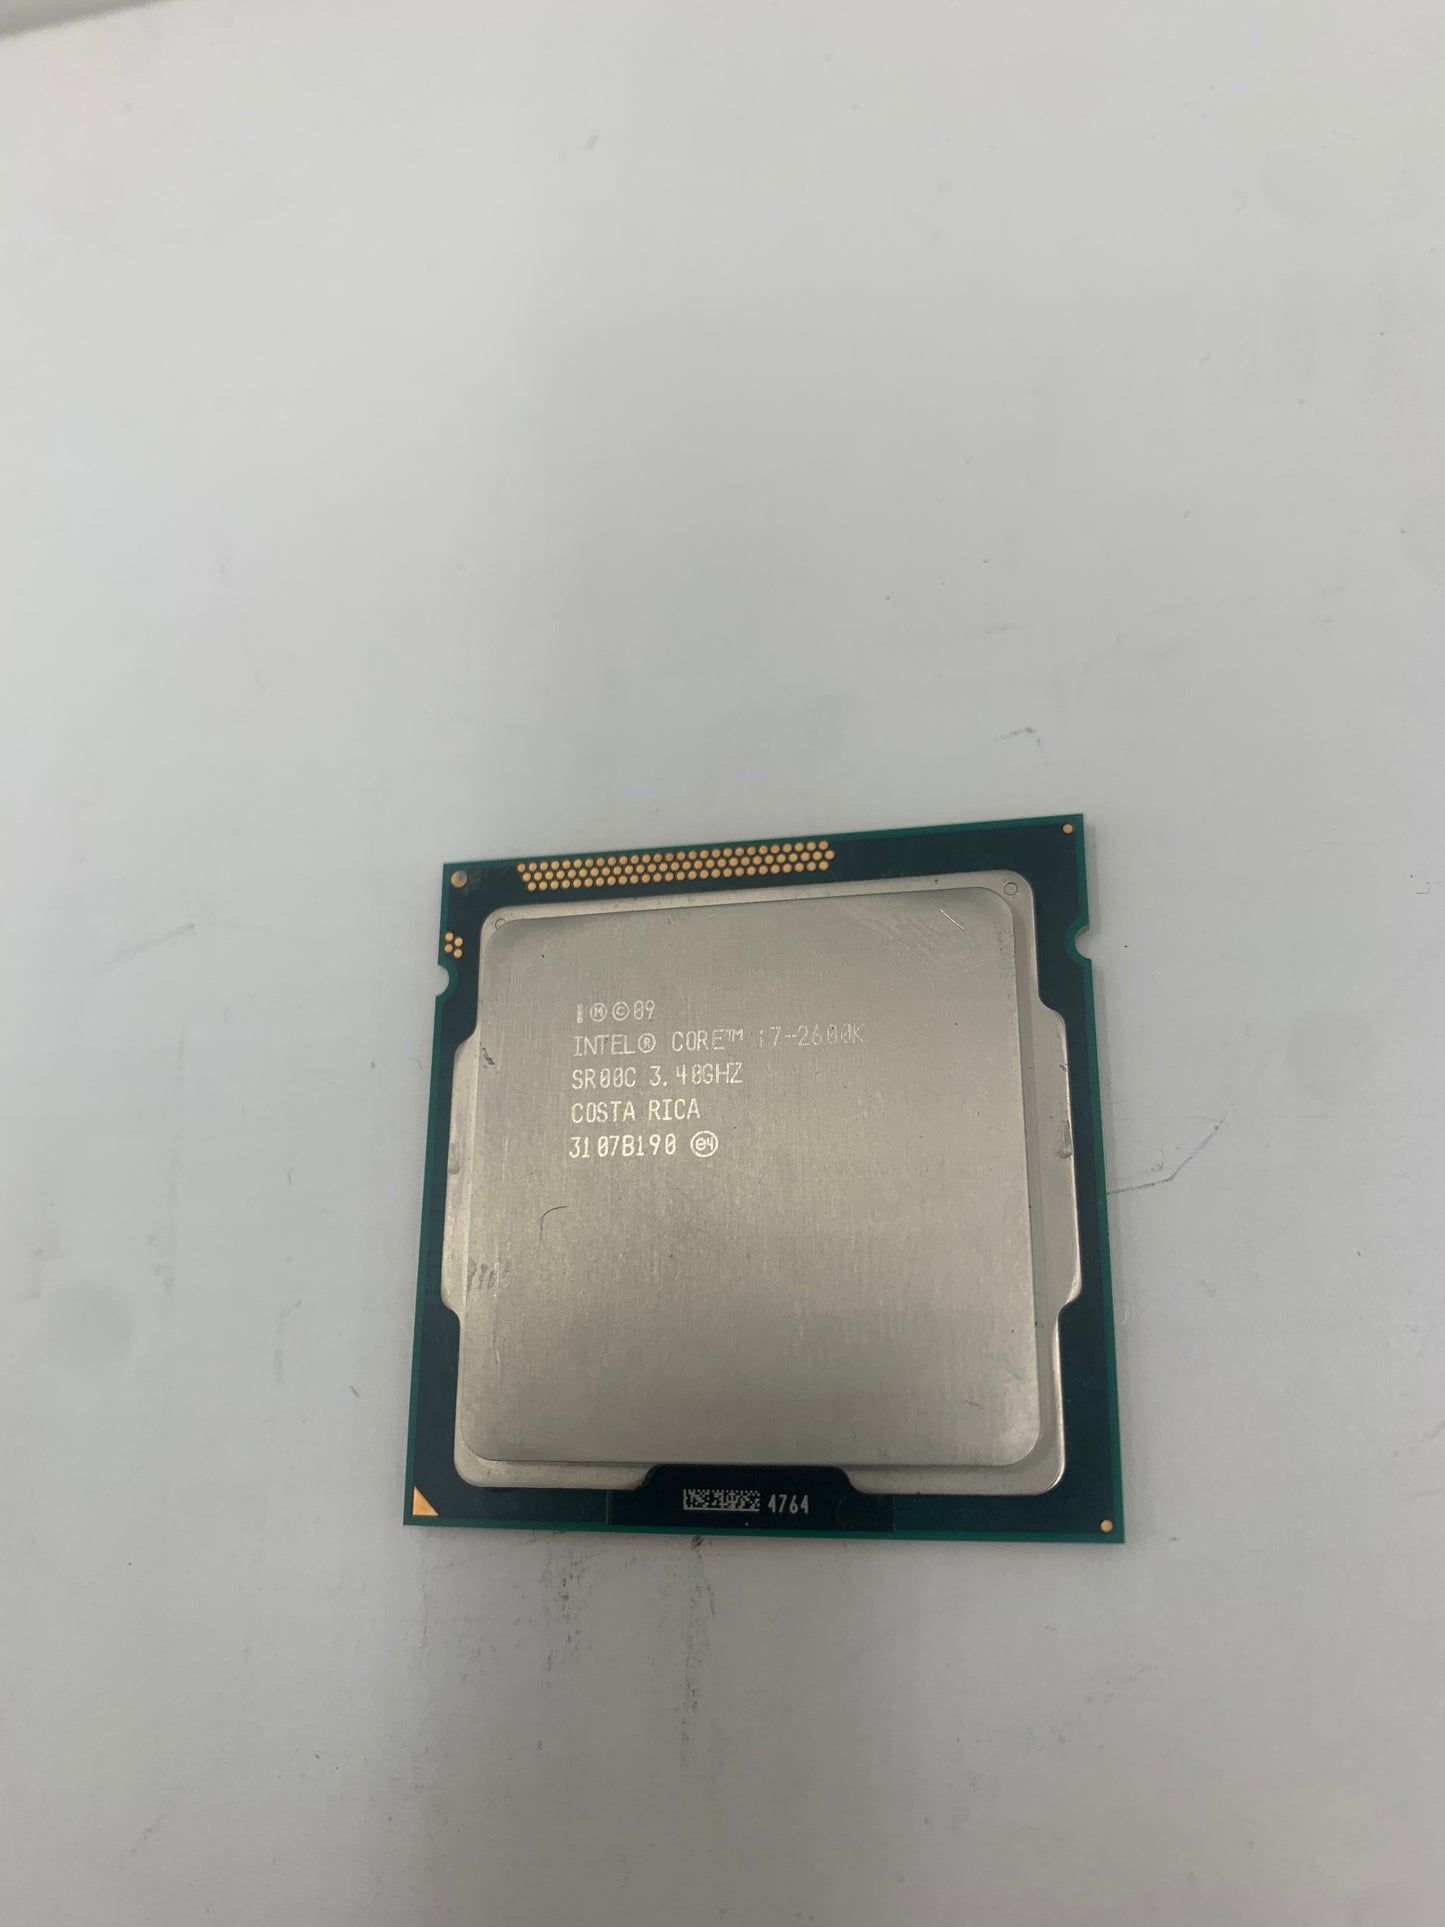 Intel i7-2600k Processor CPU - Socket 1155